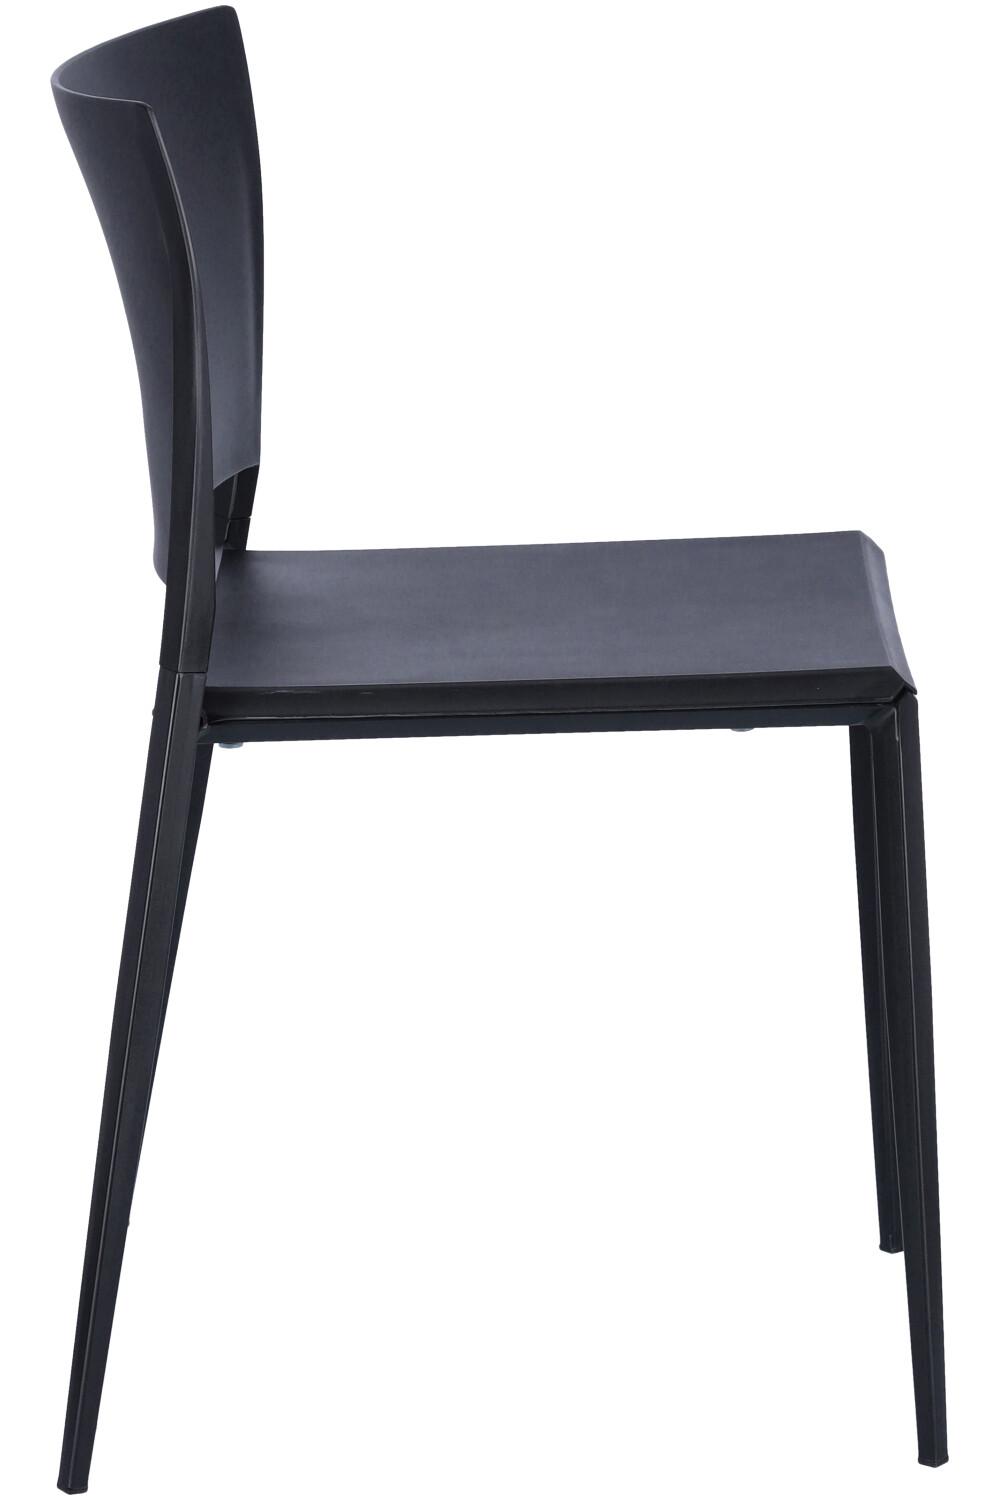 Abbildung chair Barlin Seitenansicht